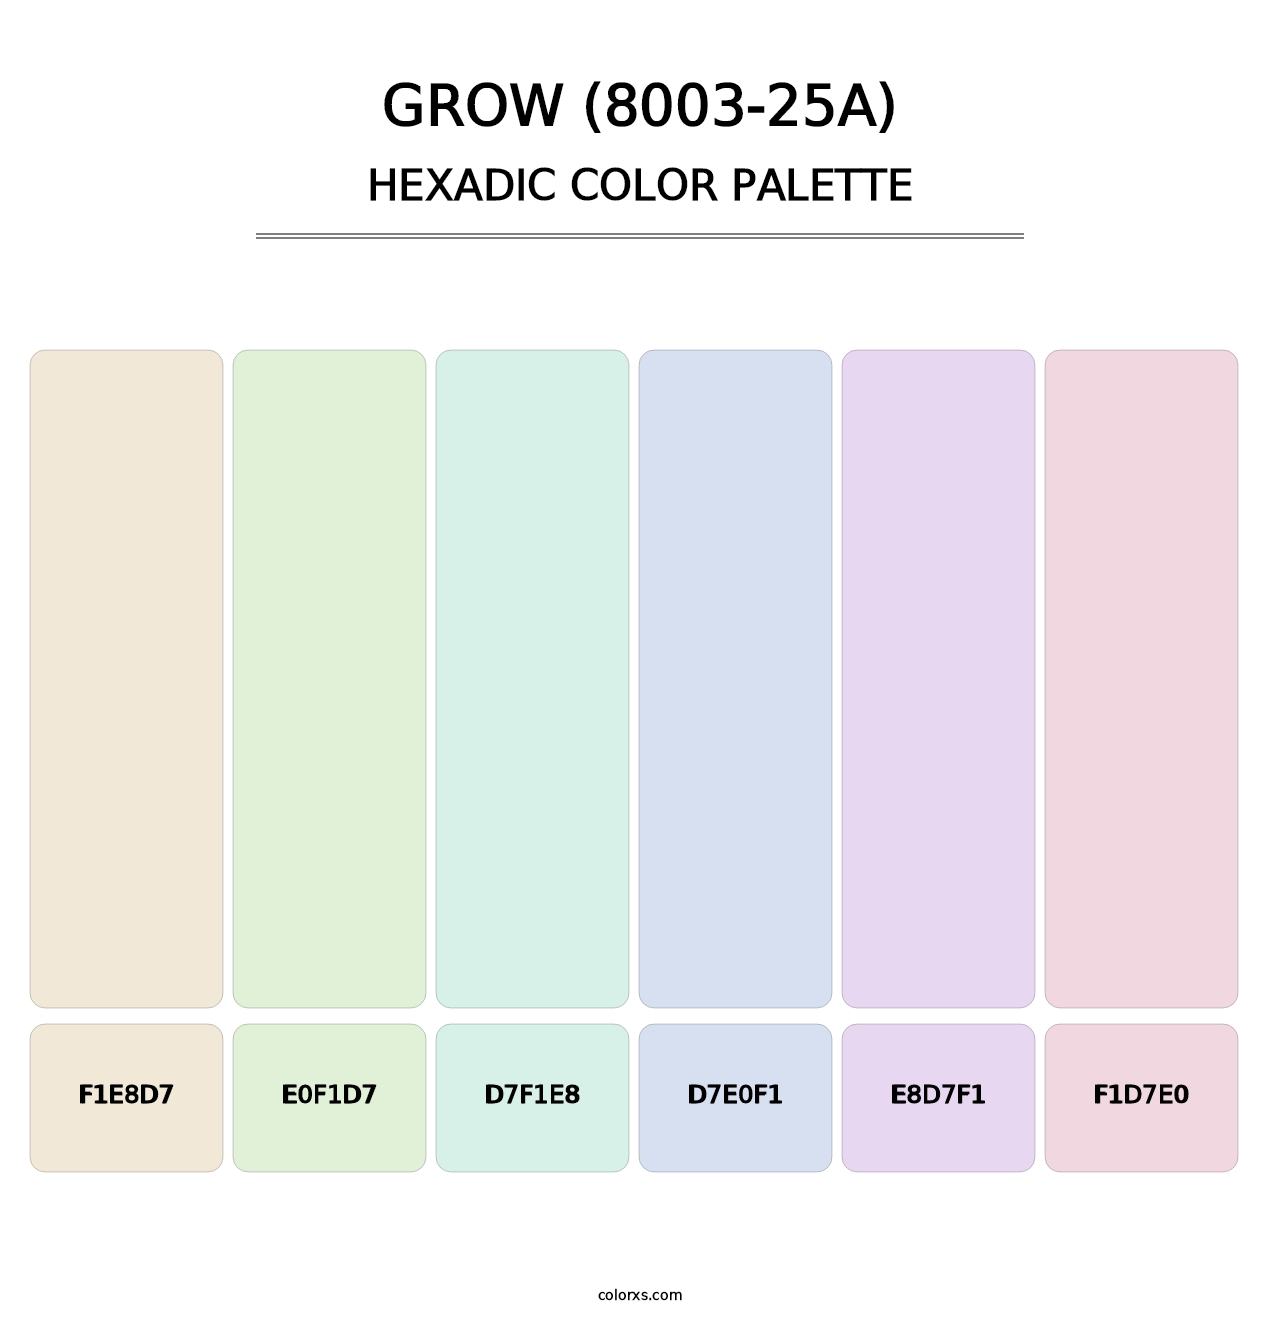 Grow (8003-25A) - Hexadic Color Palette